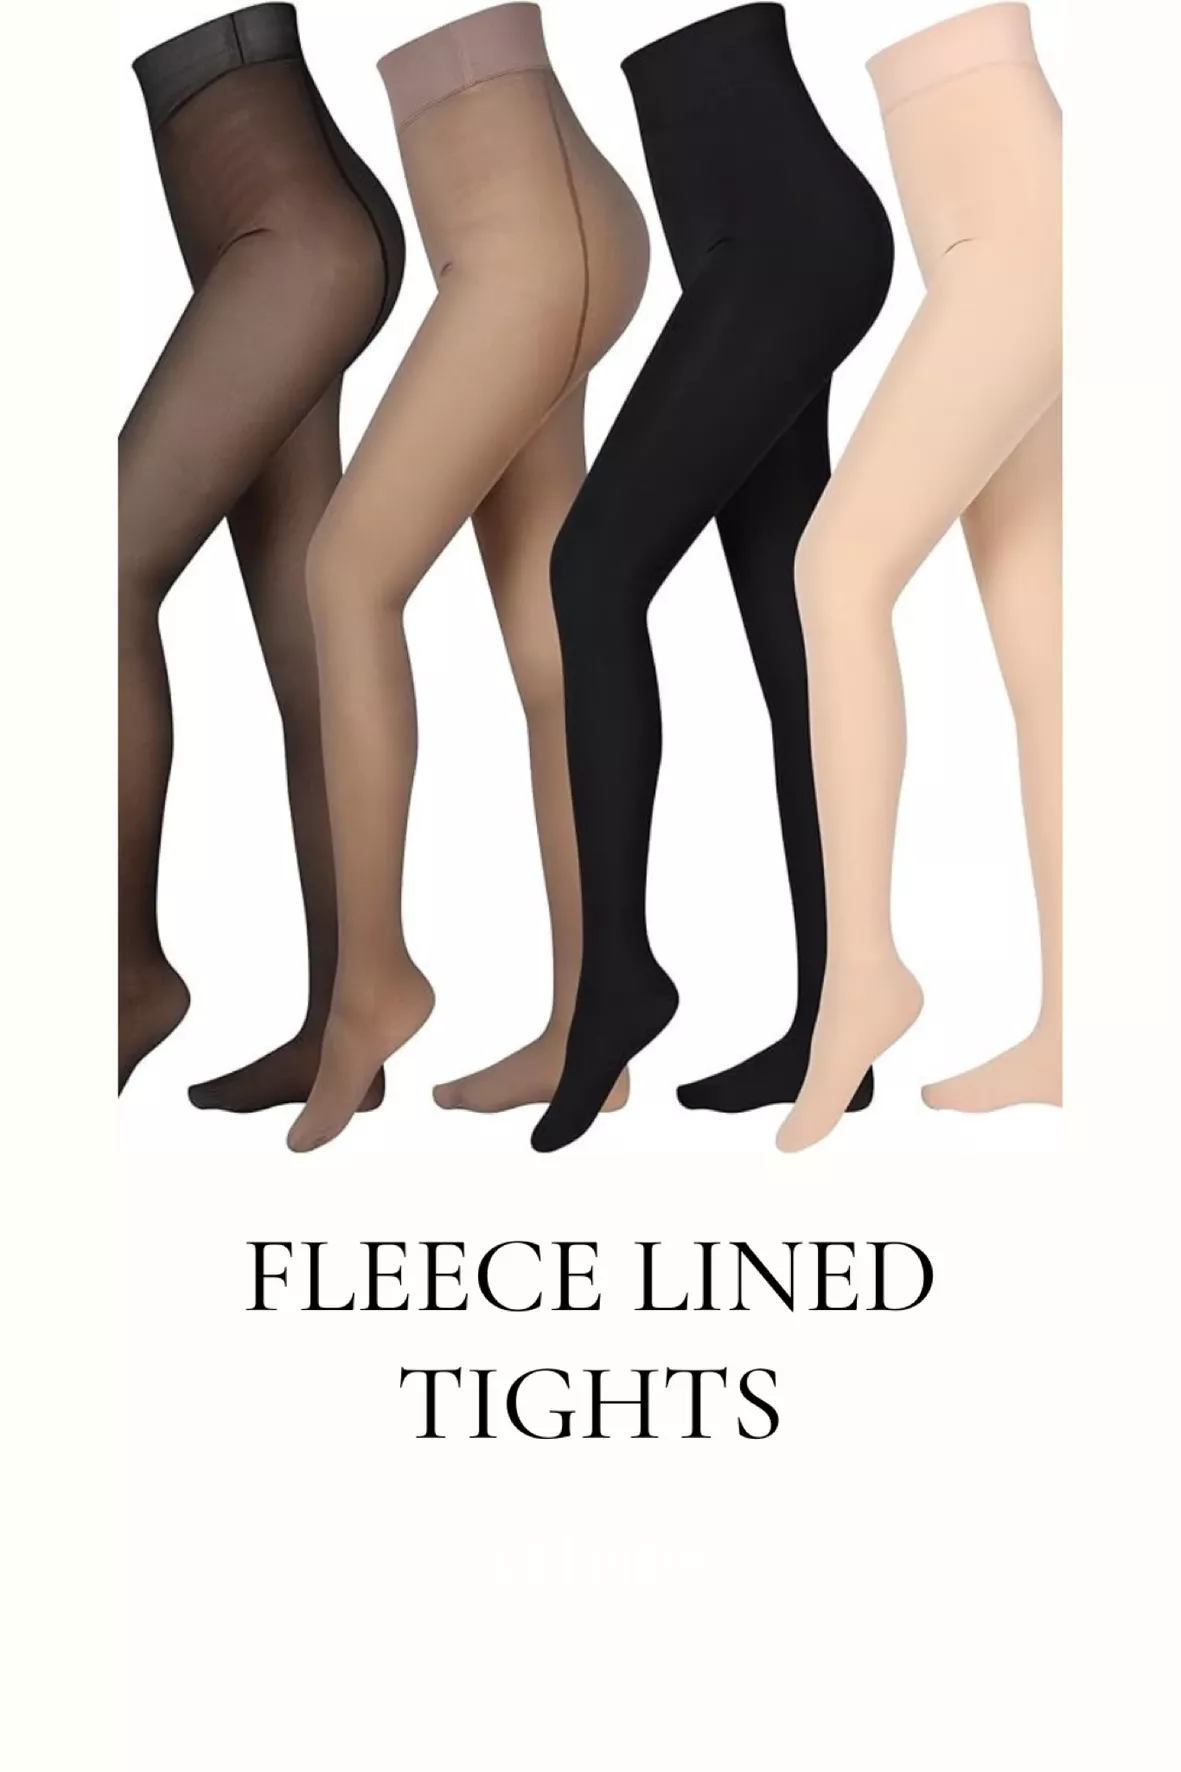  Fleece Lined Stockings